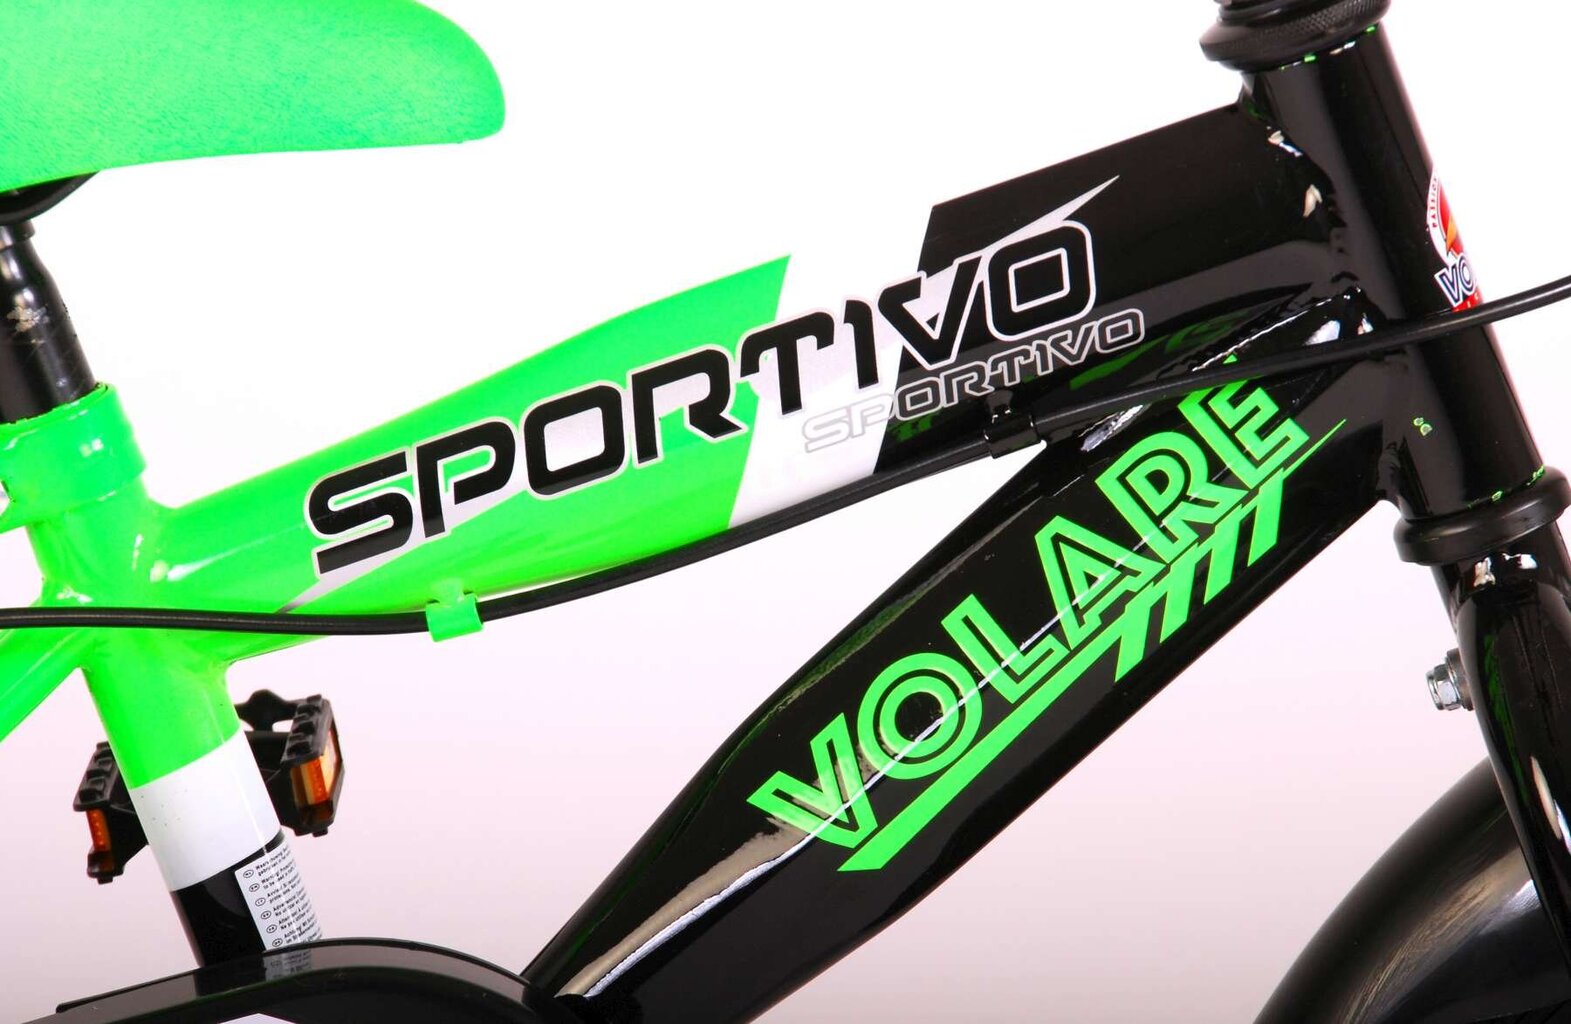 Bērnu velosipēds 12" Volare Sportivo Boys - Neona/zaļš/melns cena un informācija | Velosipēdi | 220.lv